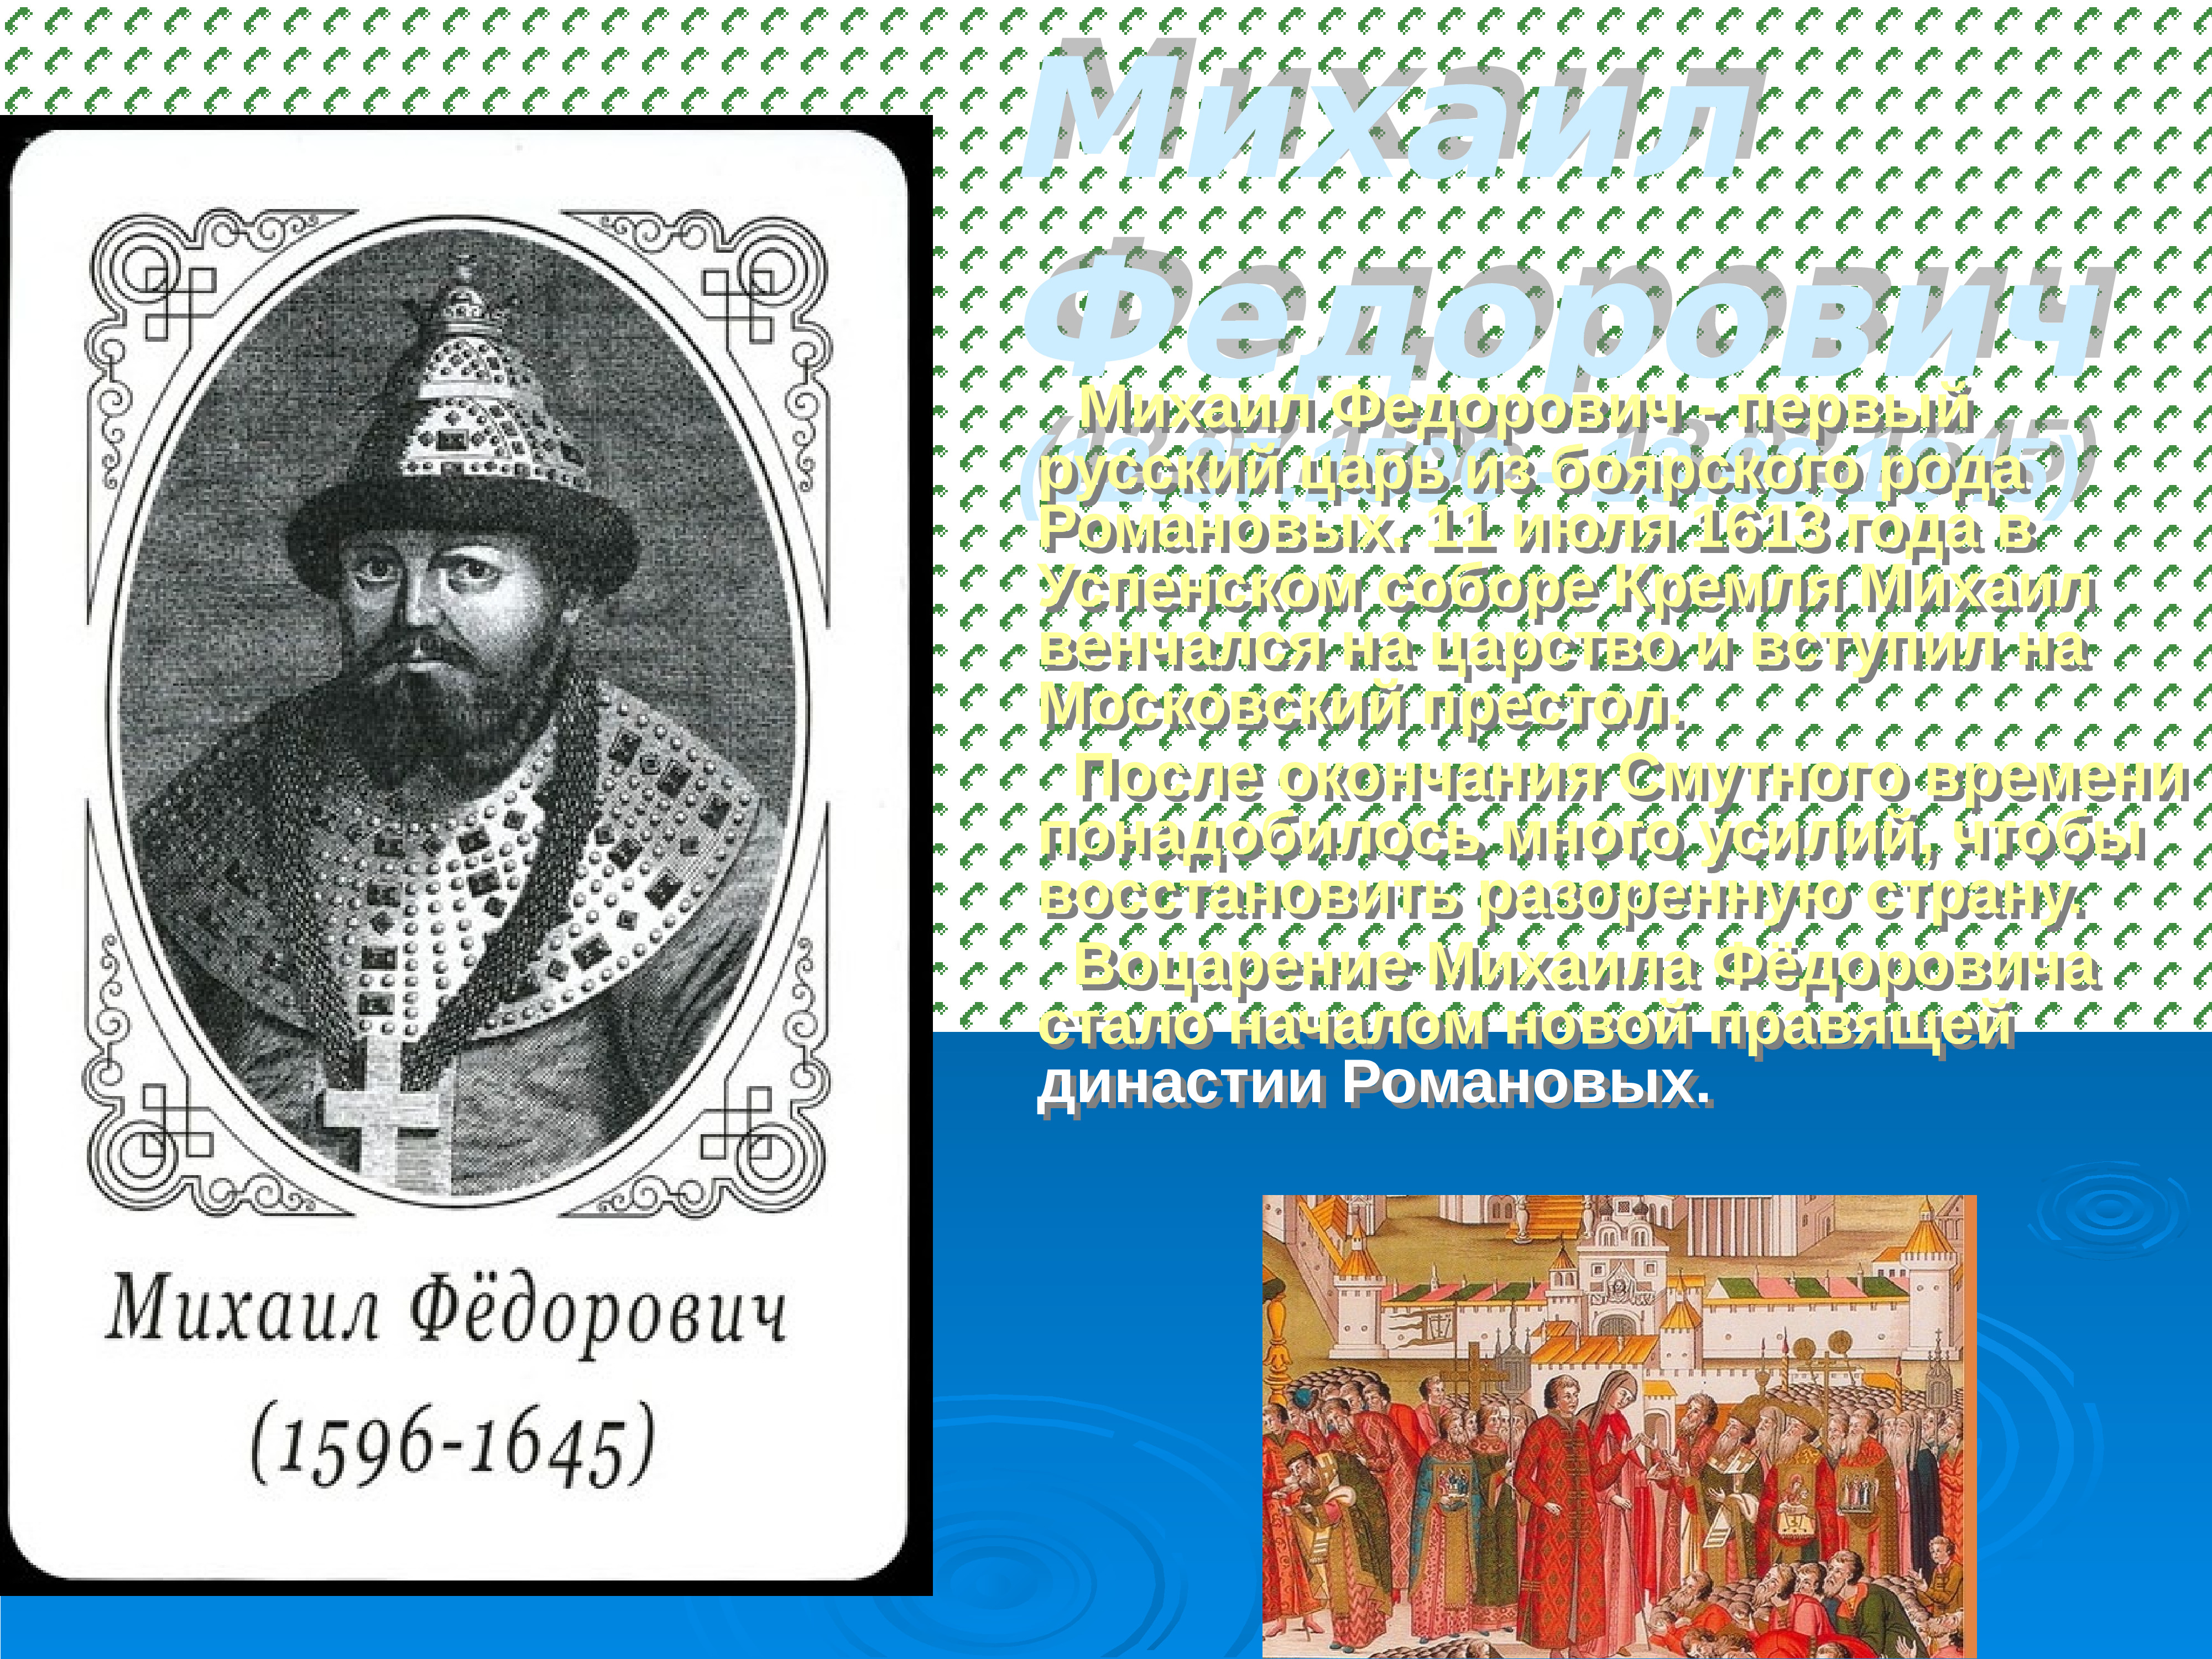 Русский боярский род. Михаила Федоровича Романова (1613-1645 г.г.).